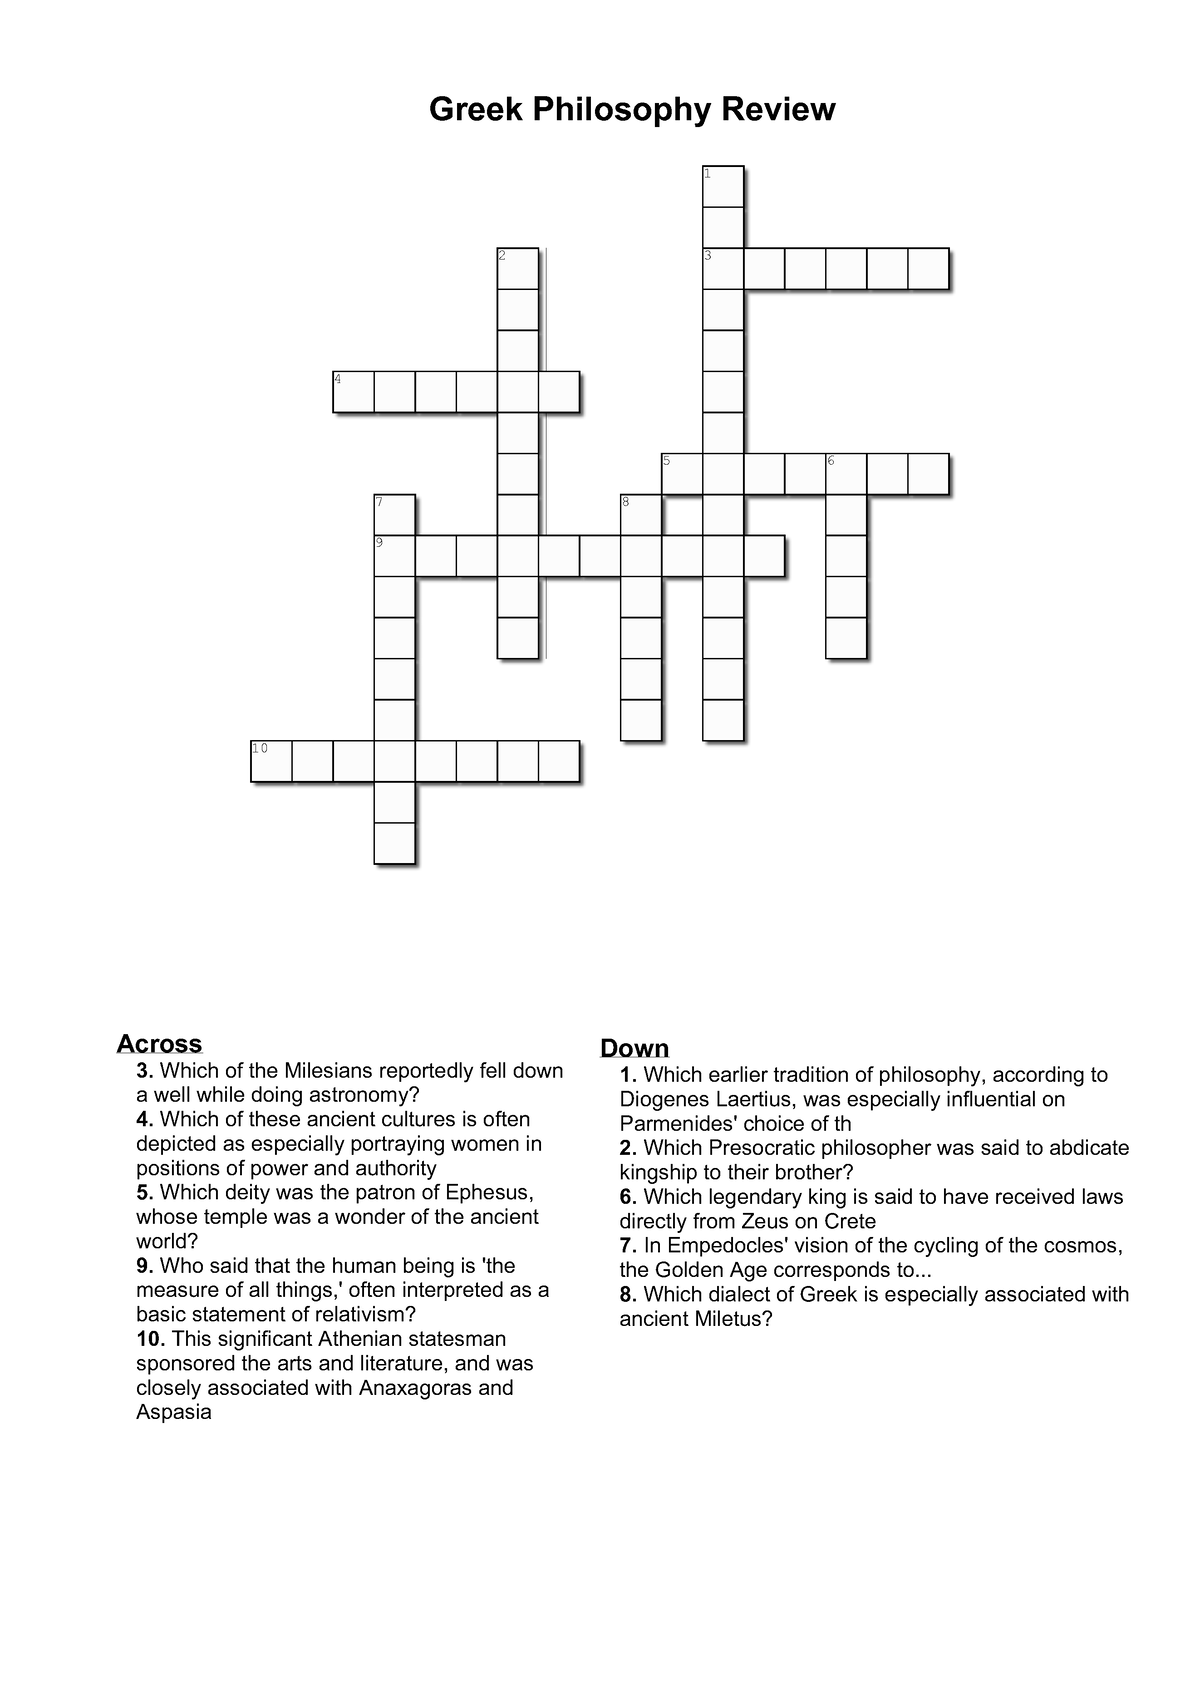 Greek Philosophy Review Crossword Puzzle Greek Philosophy Review 1 2